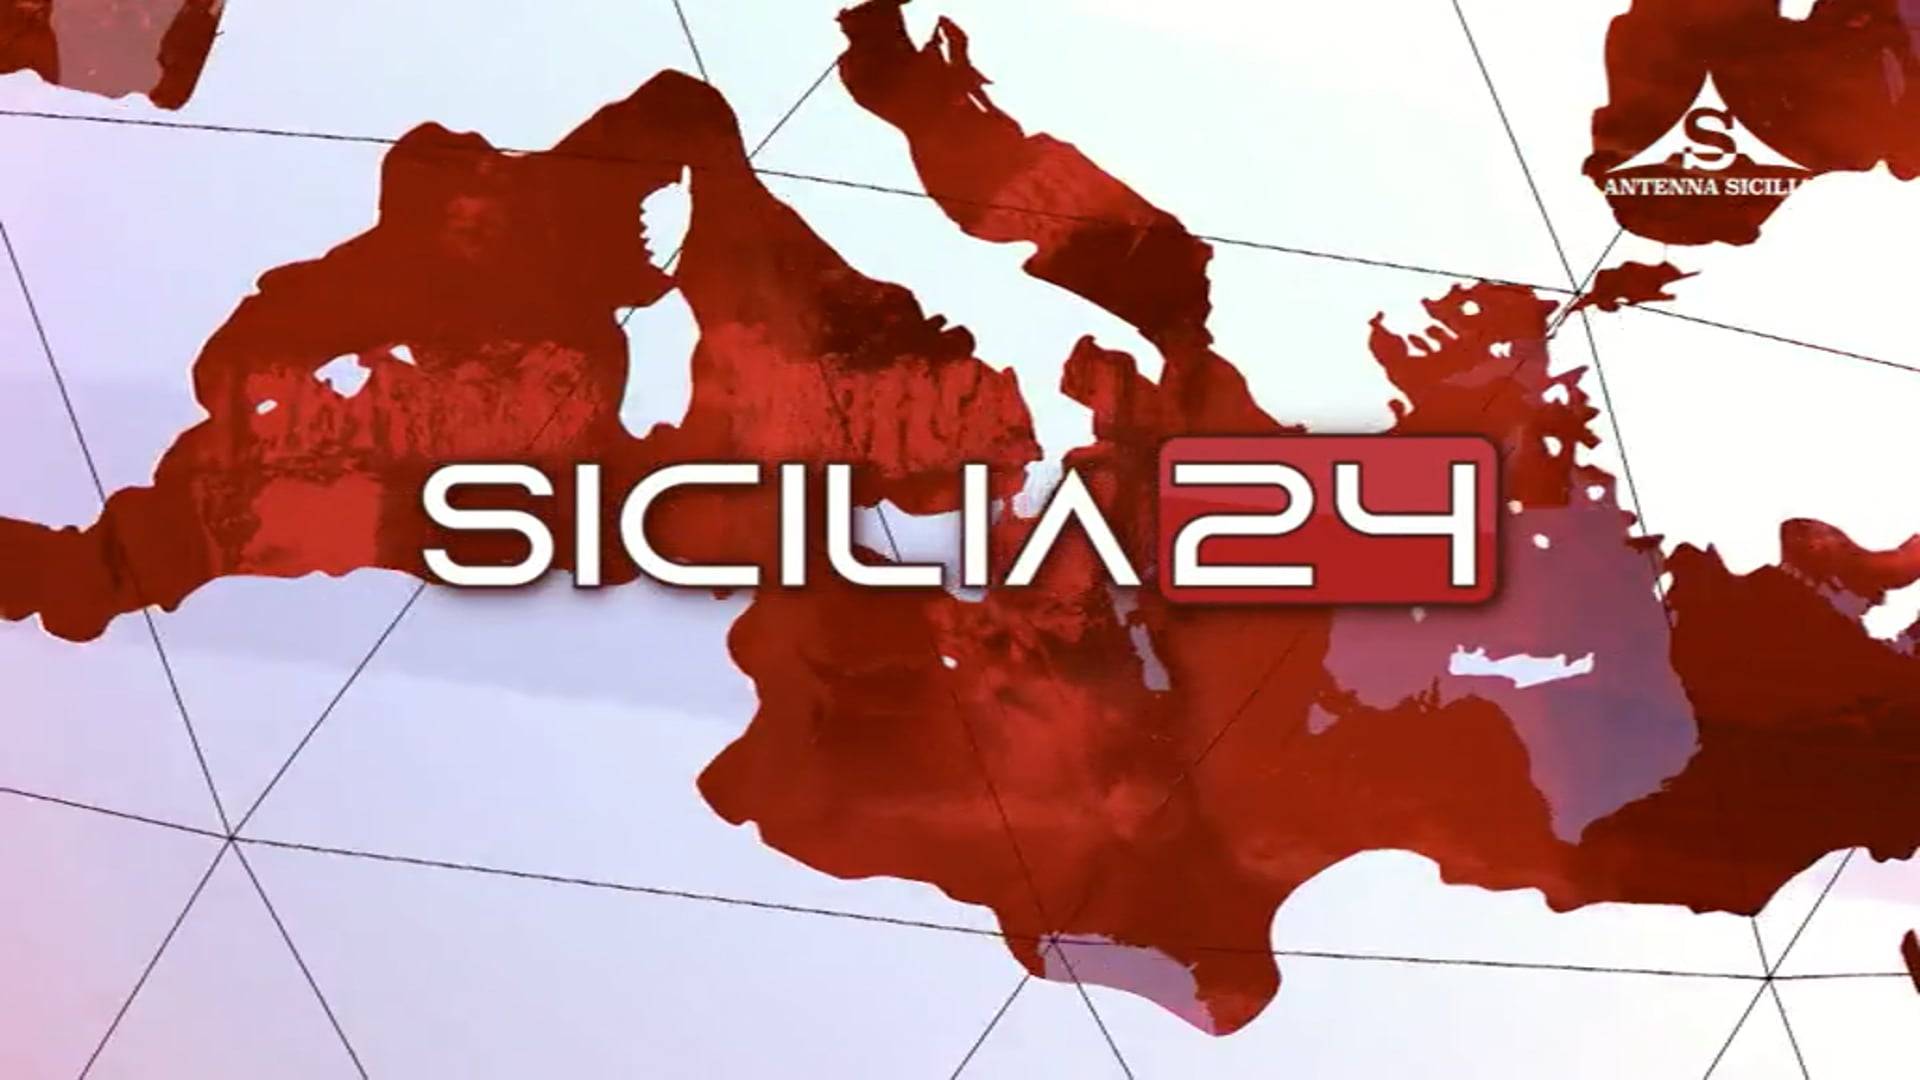 sicilia24-rassegna-stampa-12-marzo-2022-vimeo-thumbnail.jpg